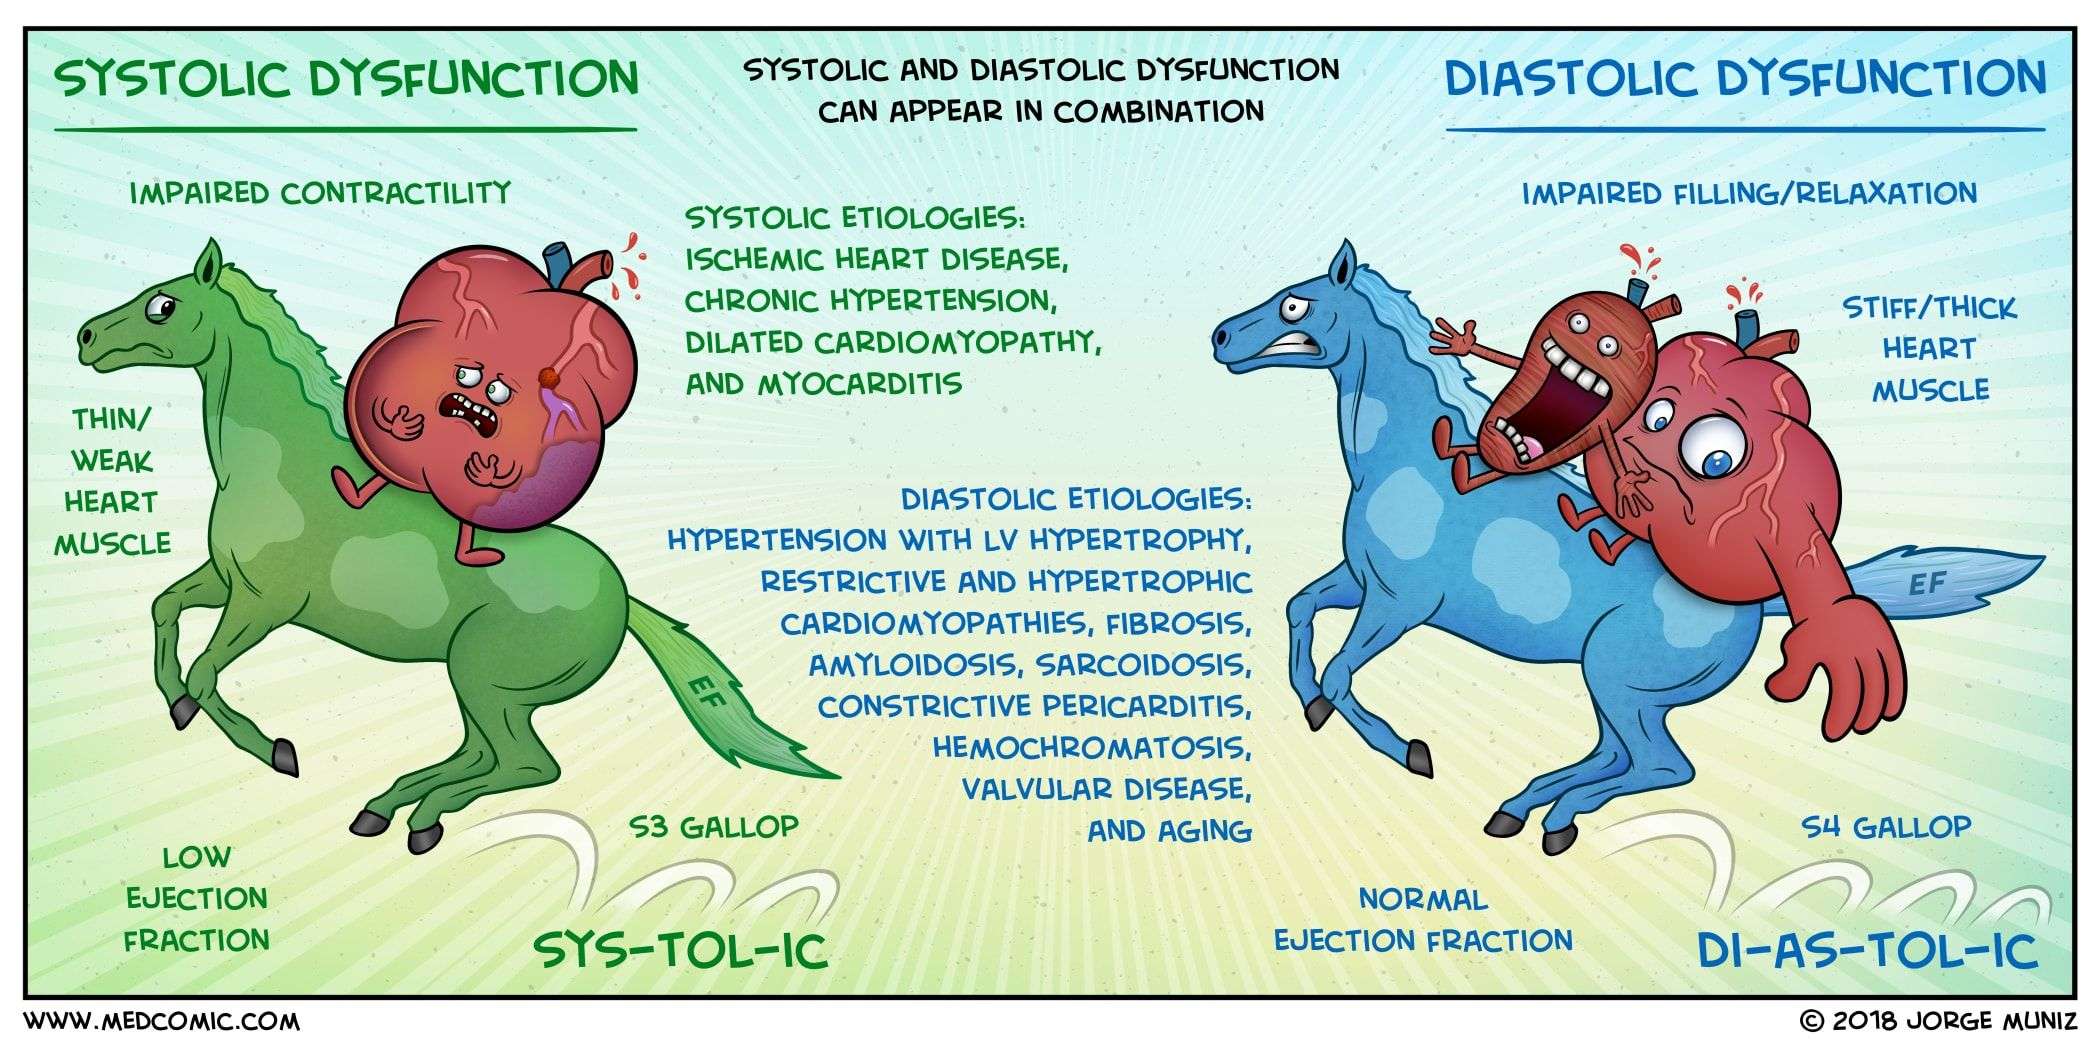 Systolic vs Diastolic Dysfunction